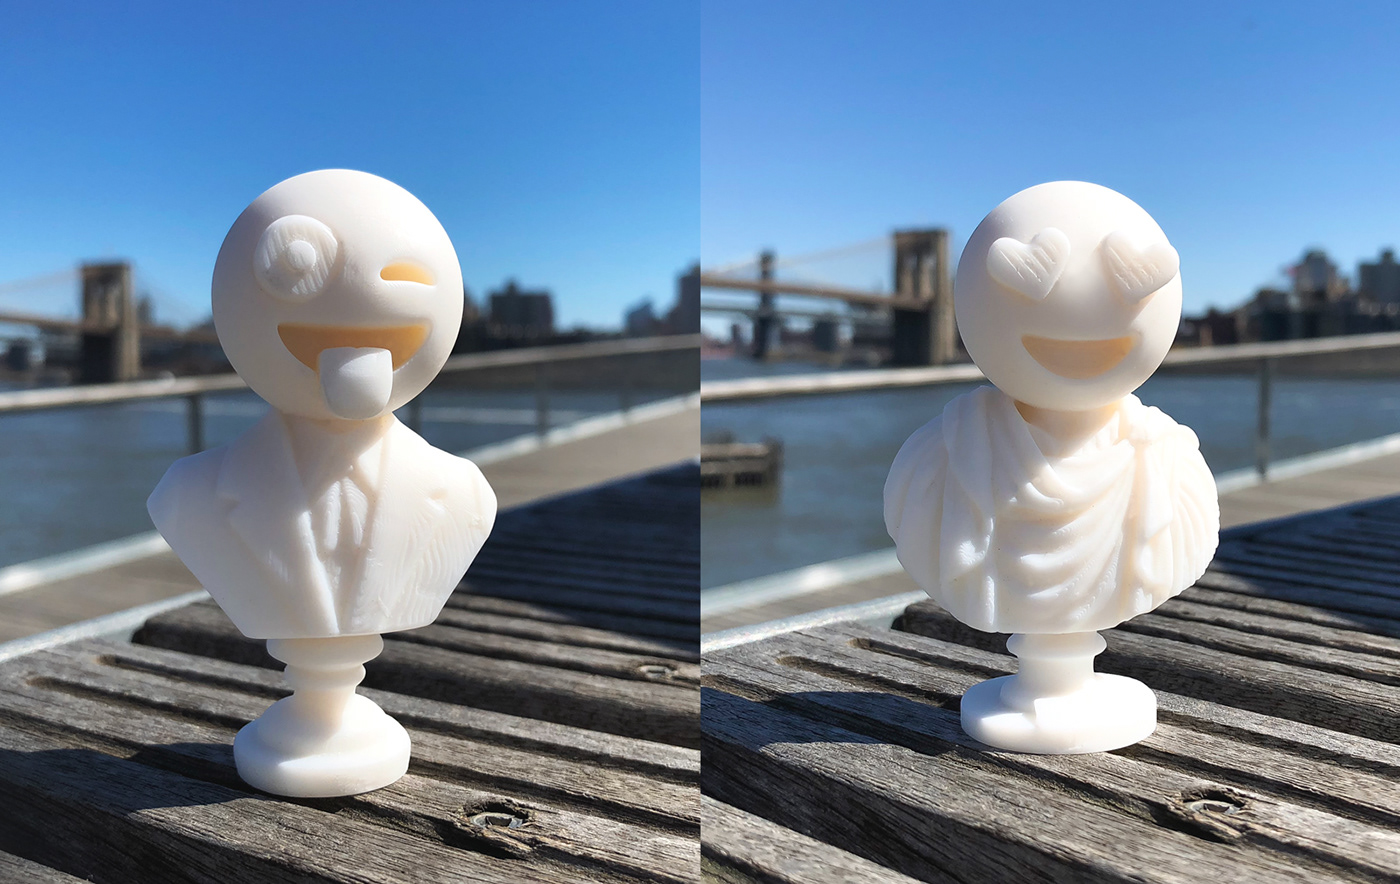 Emoji 3d print 3D Printing sculptmojis art vinyl toy Digital Art  CGI sculpture